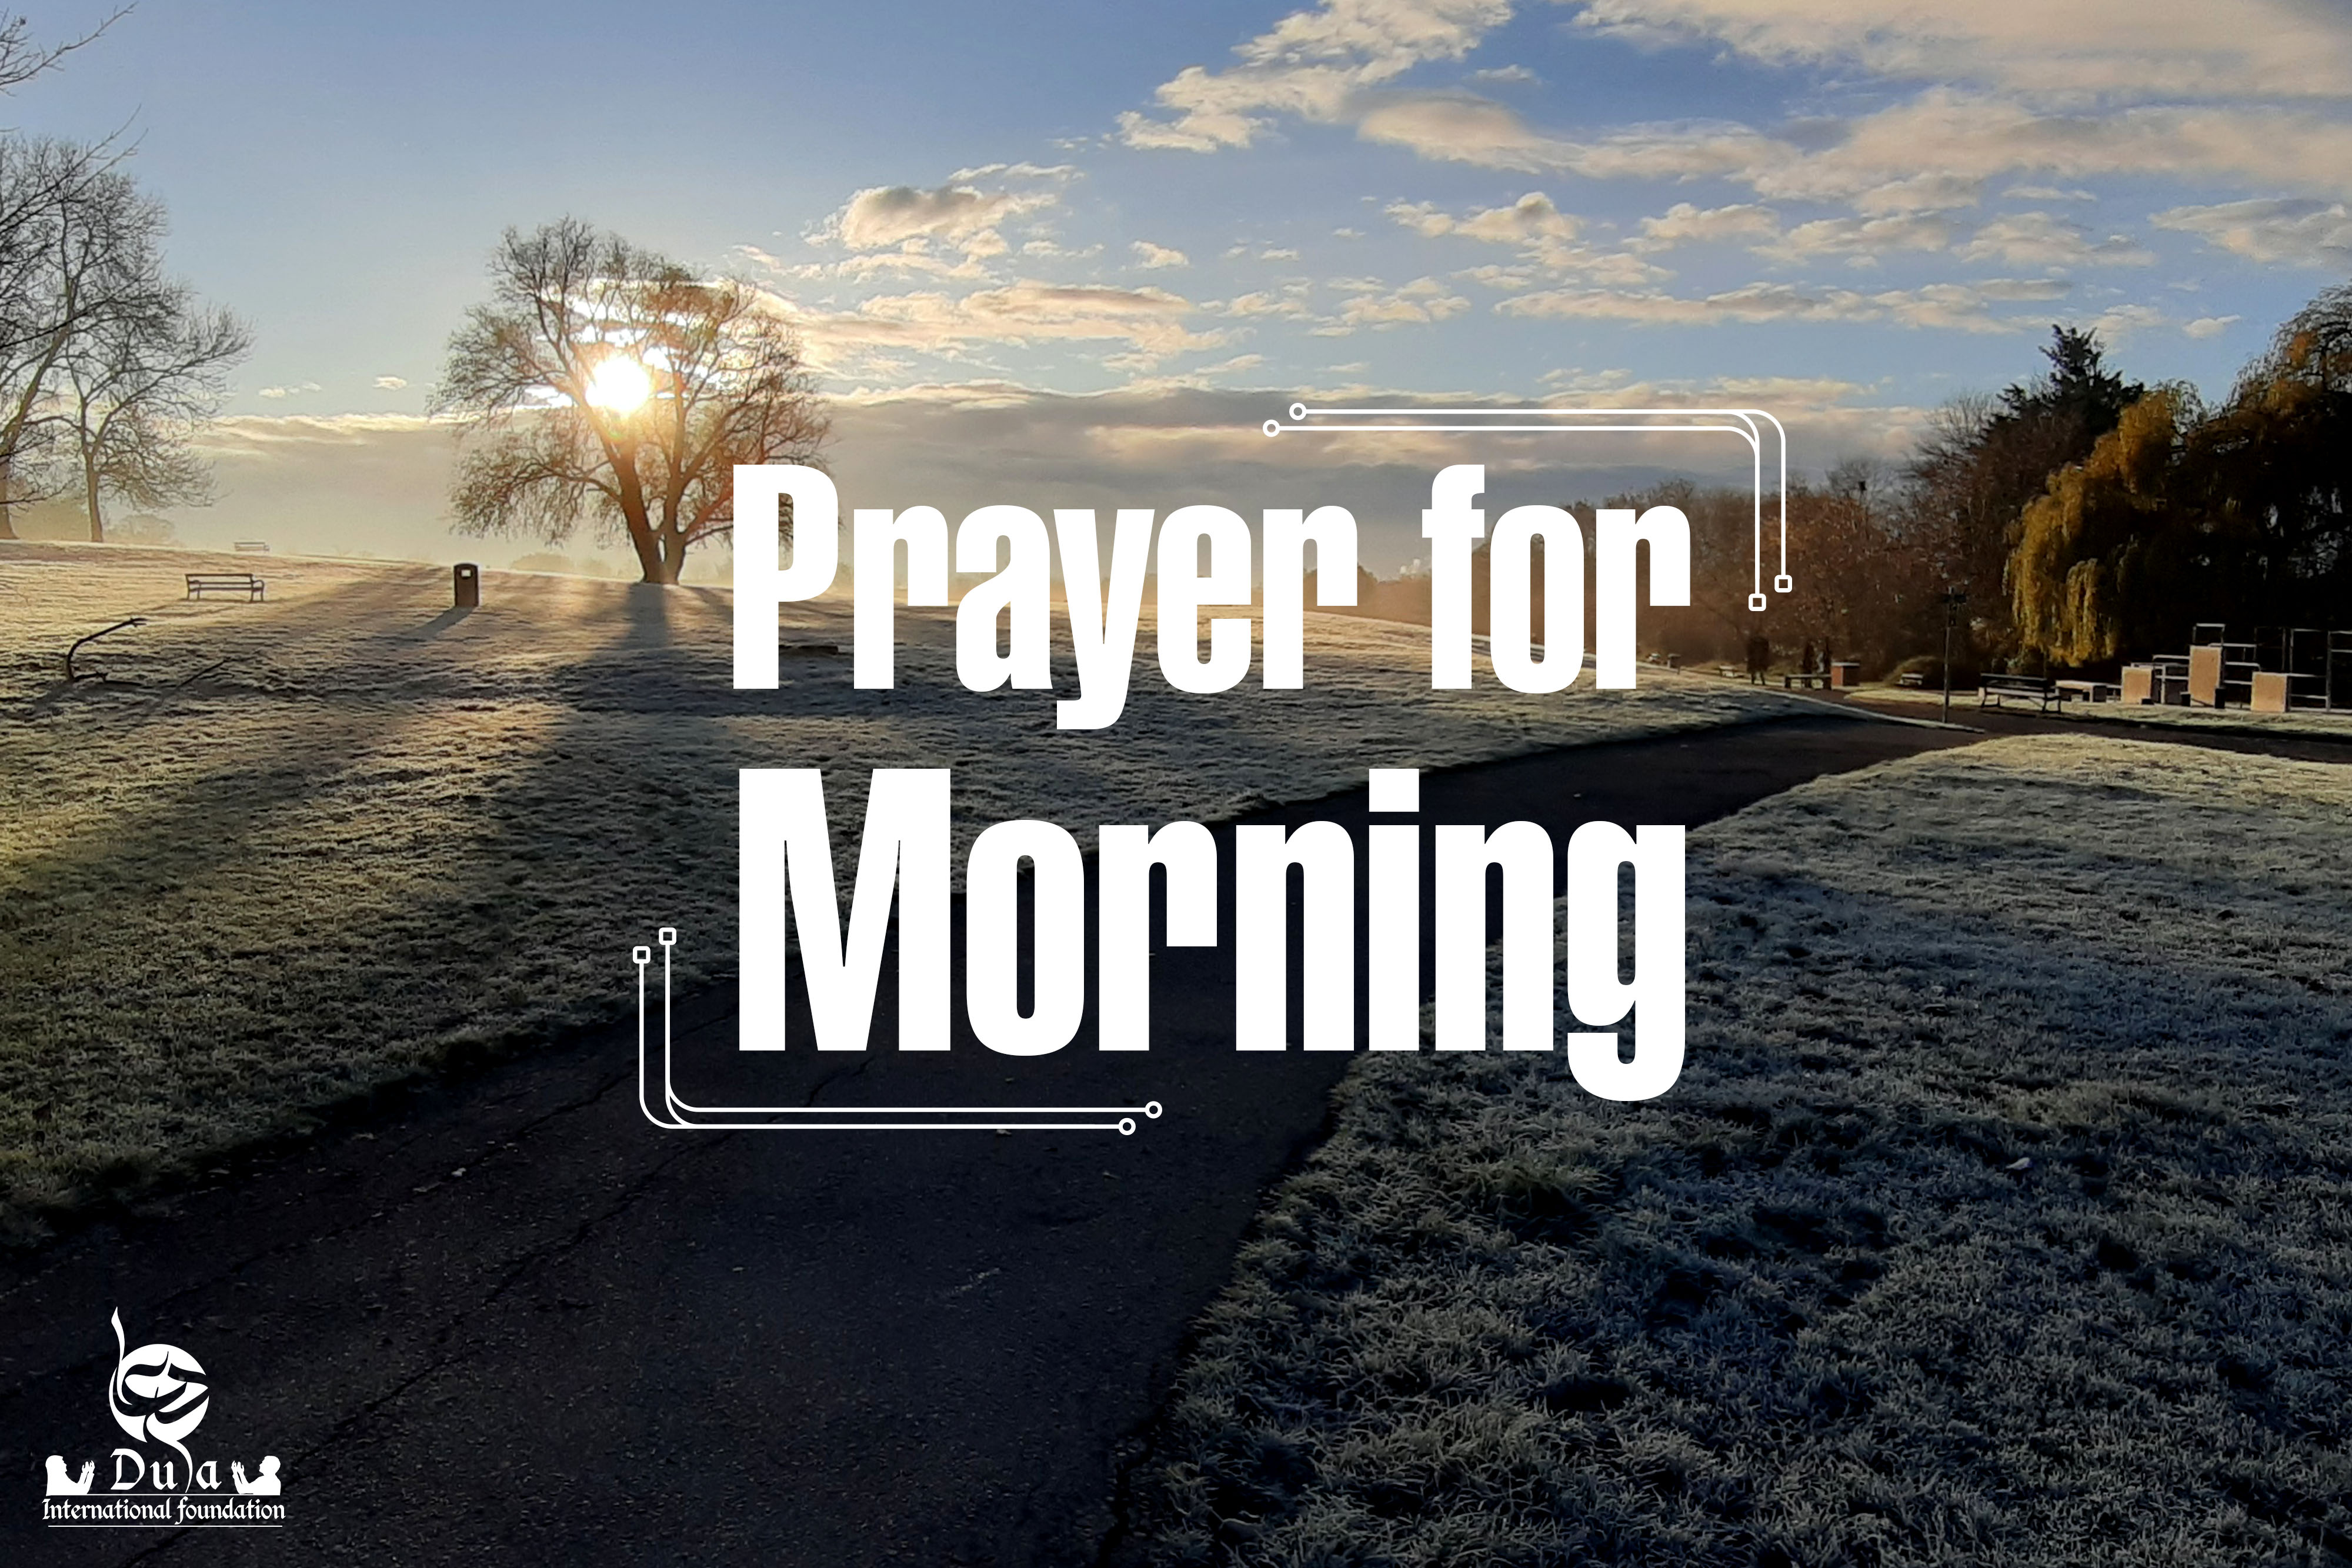 morning prayer